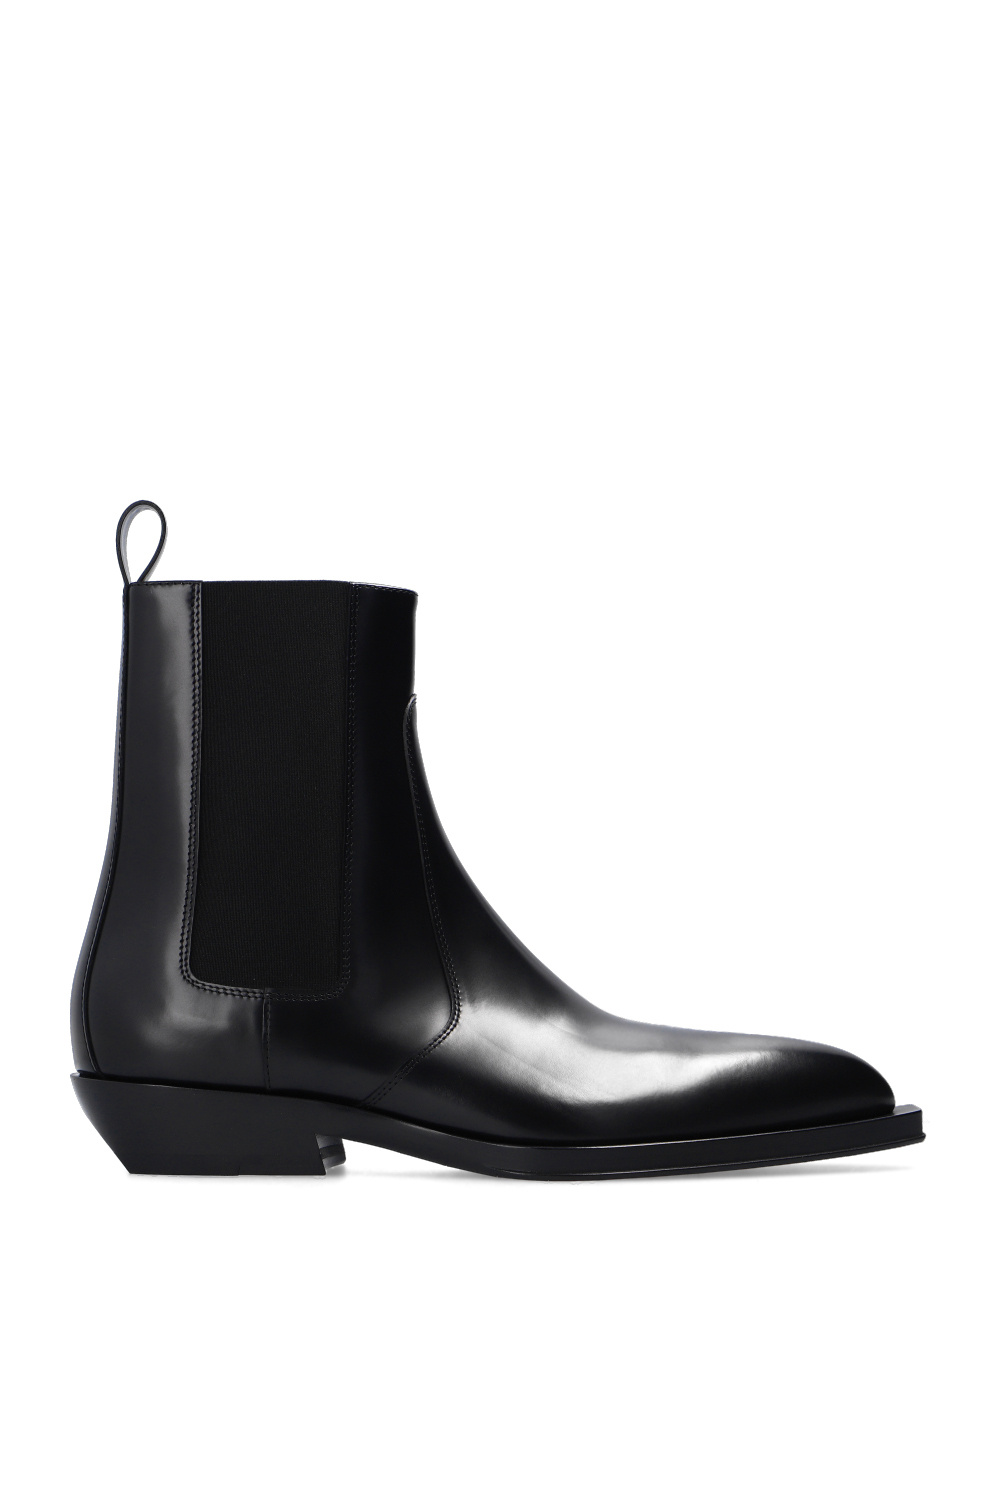 Bottega Veneta ‘Chisel’ heeled lacing boots